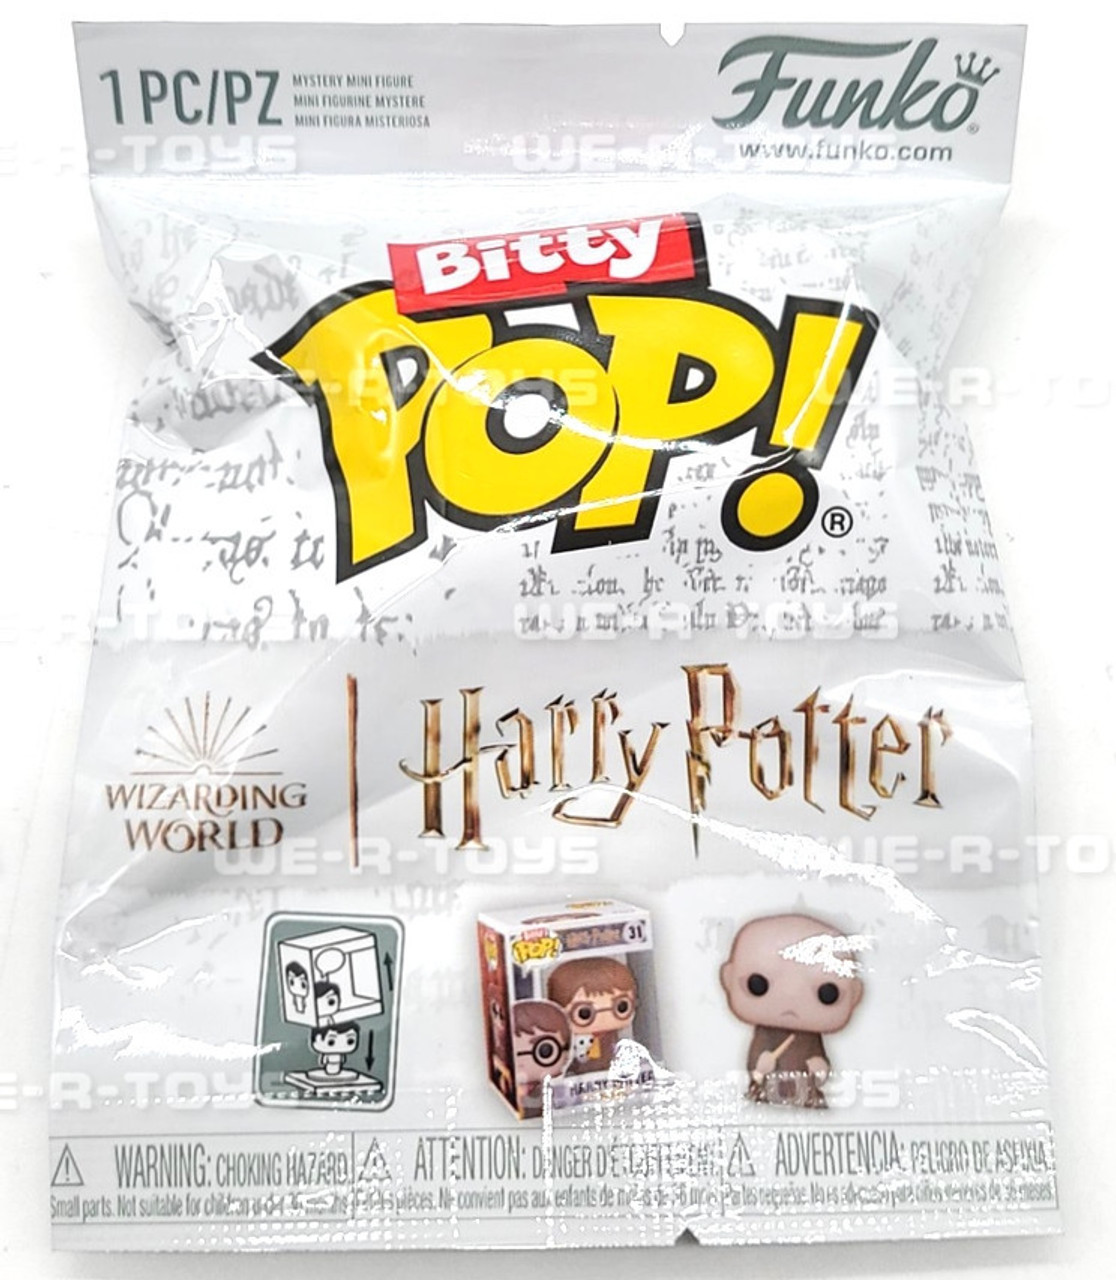 Mini Disney & Harry Potter Funko Bitty Pop! Are The Latest Singapore Blind  Bag Toy Craze